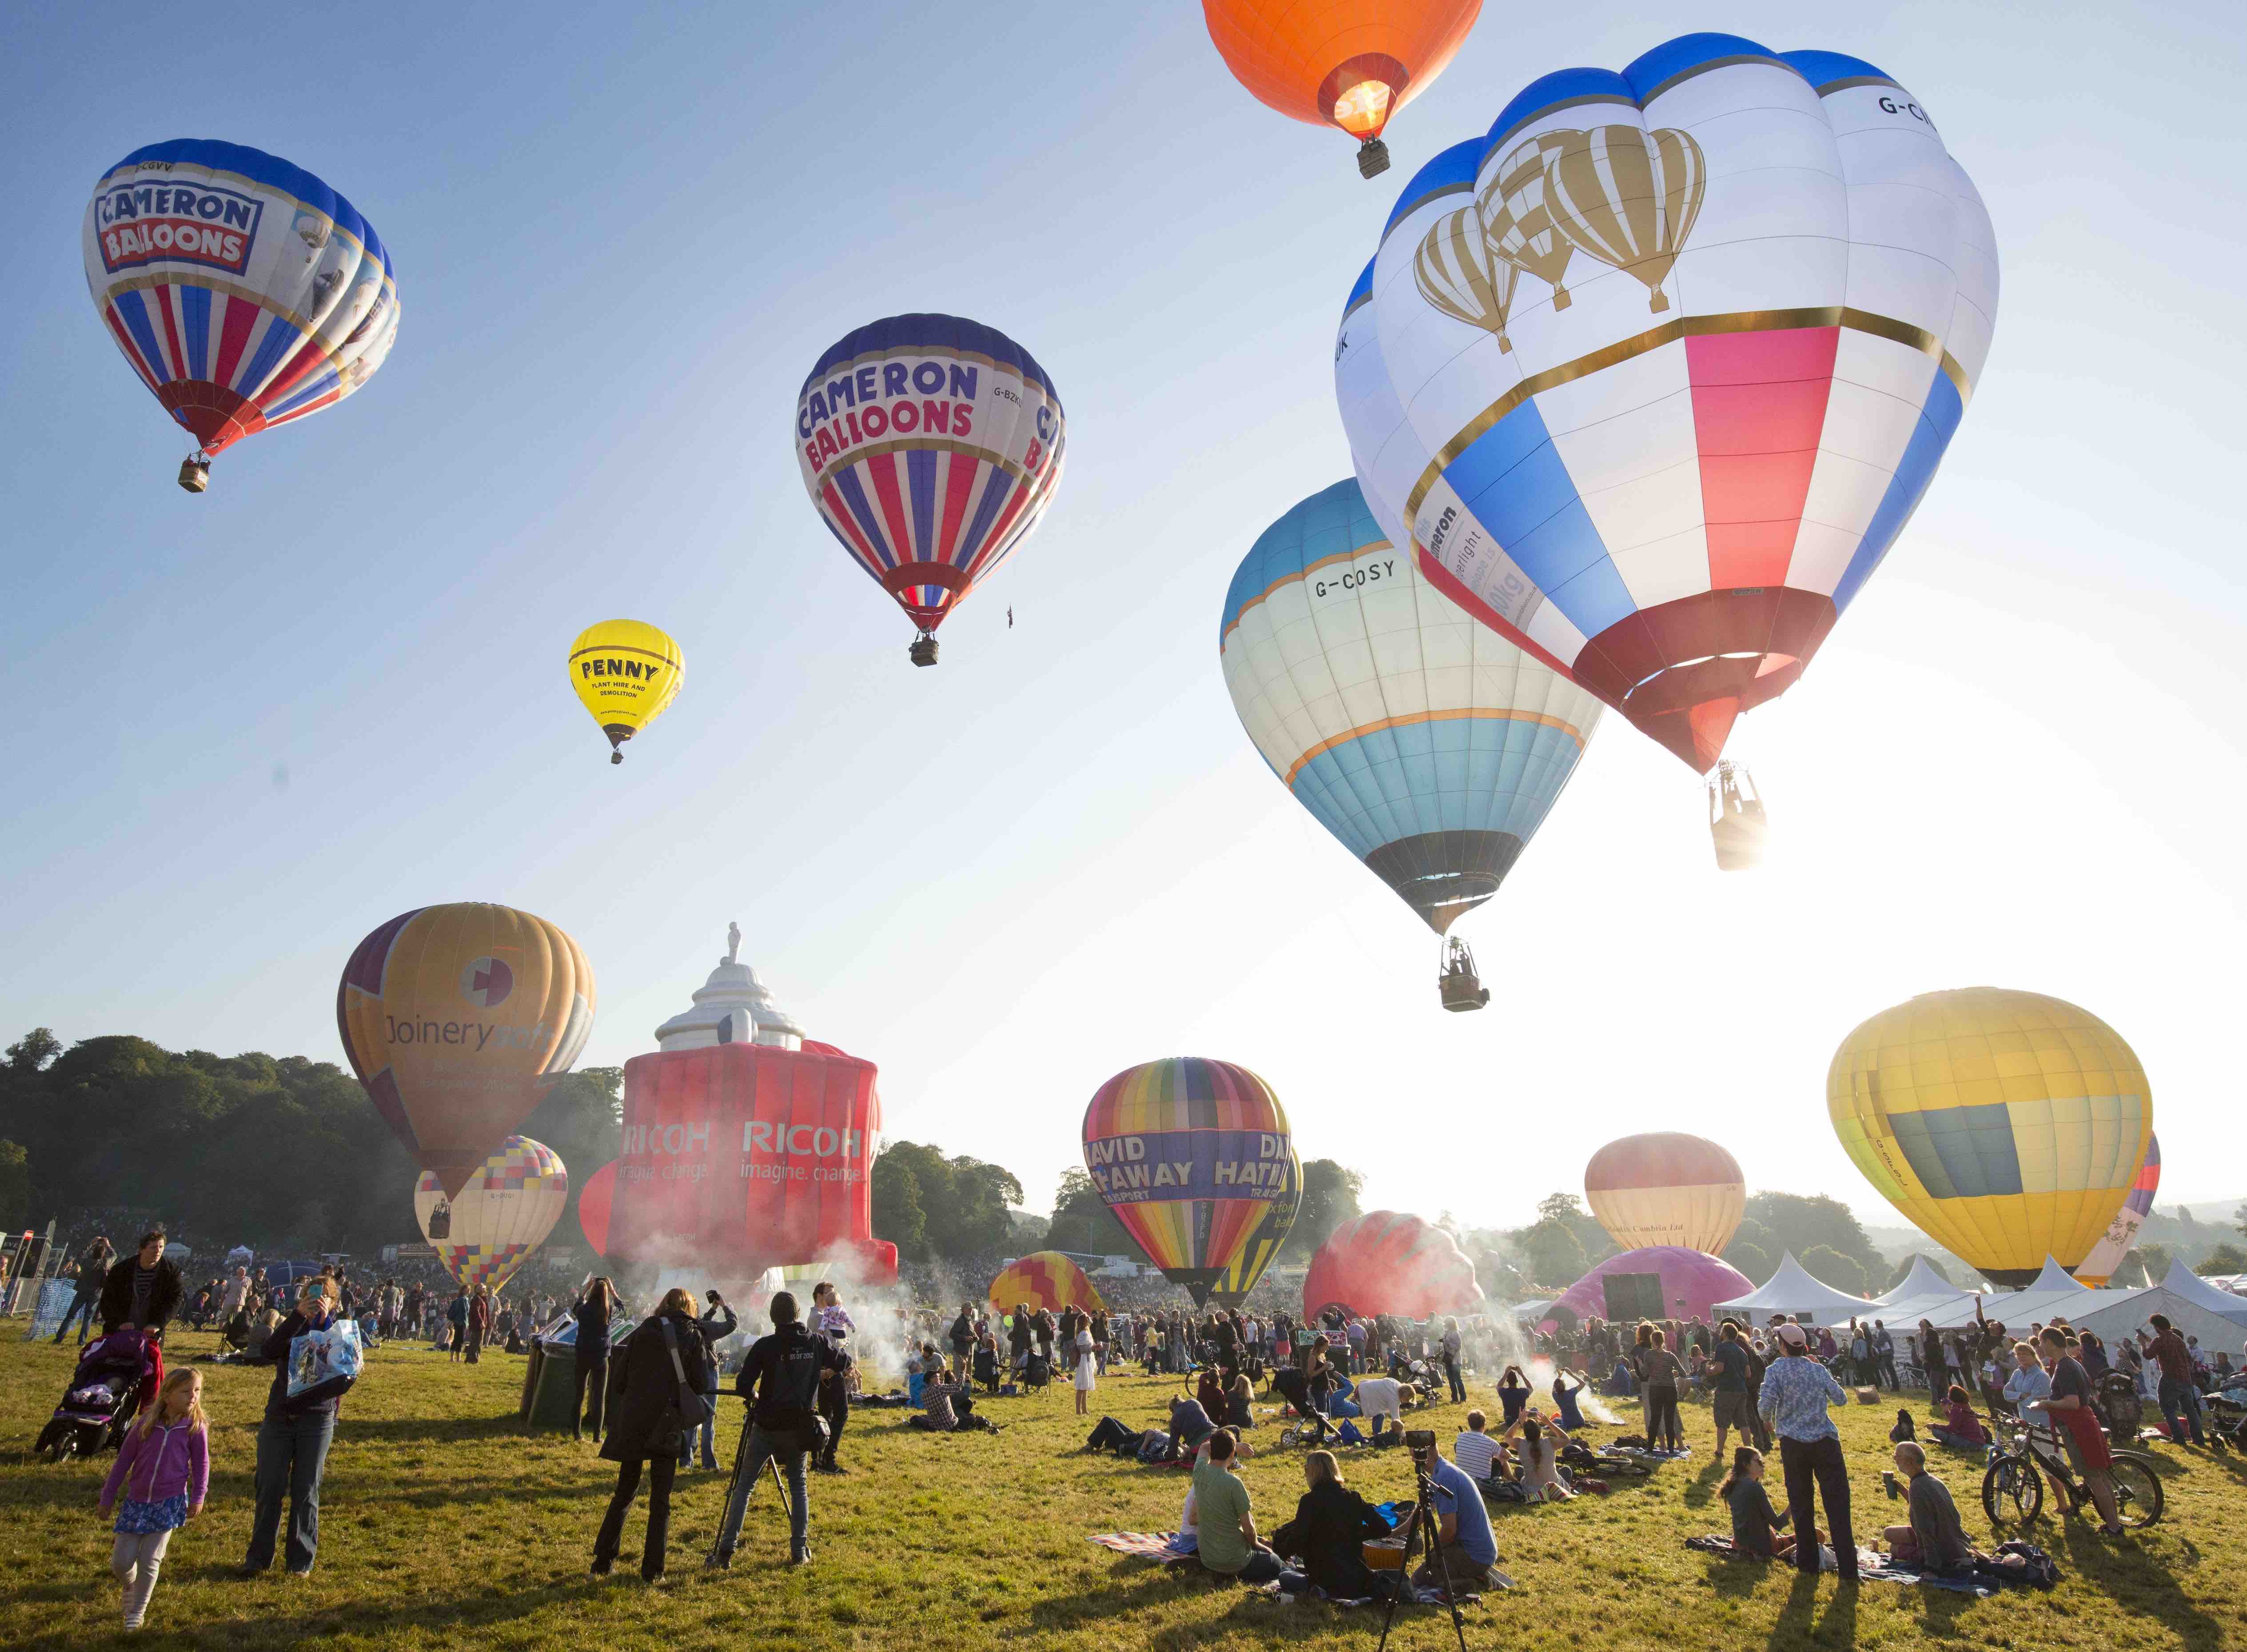 Bristol Balloon Festival in Bristol, England. Photo credit: Paul Box